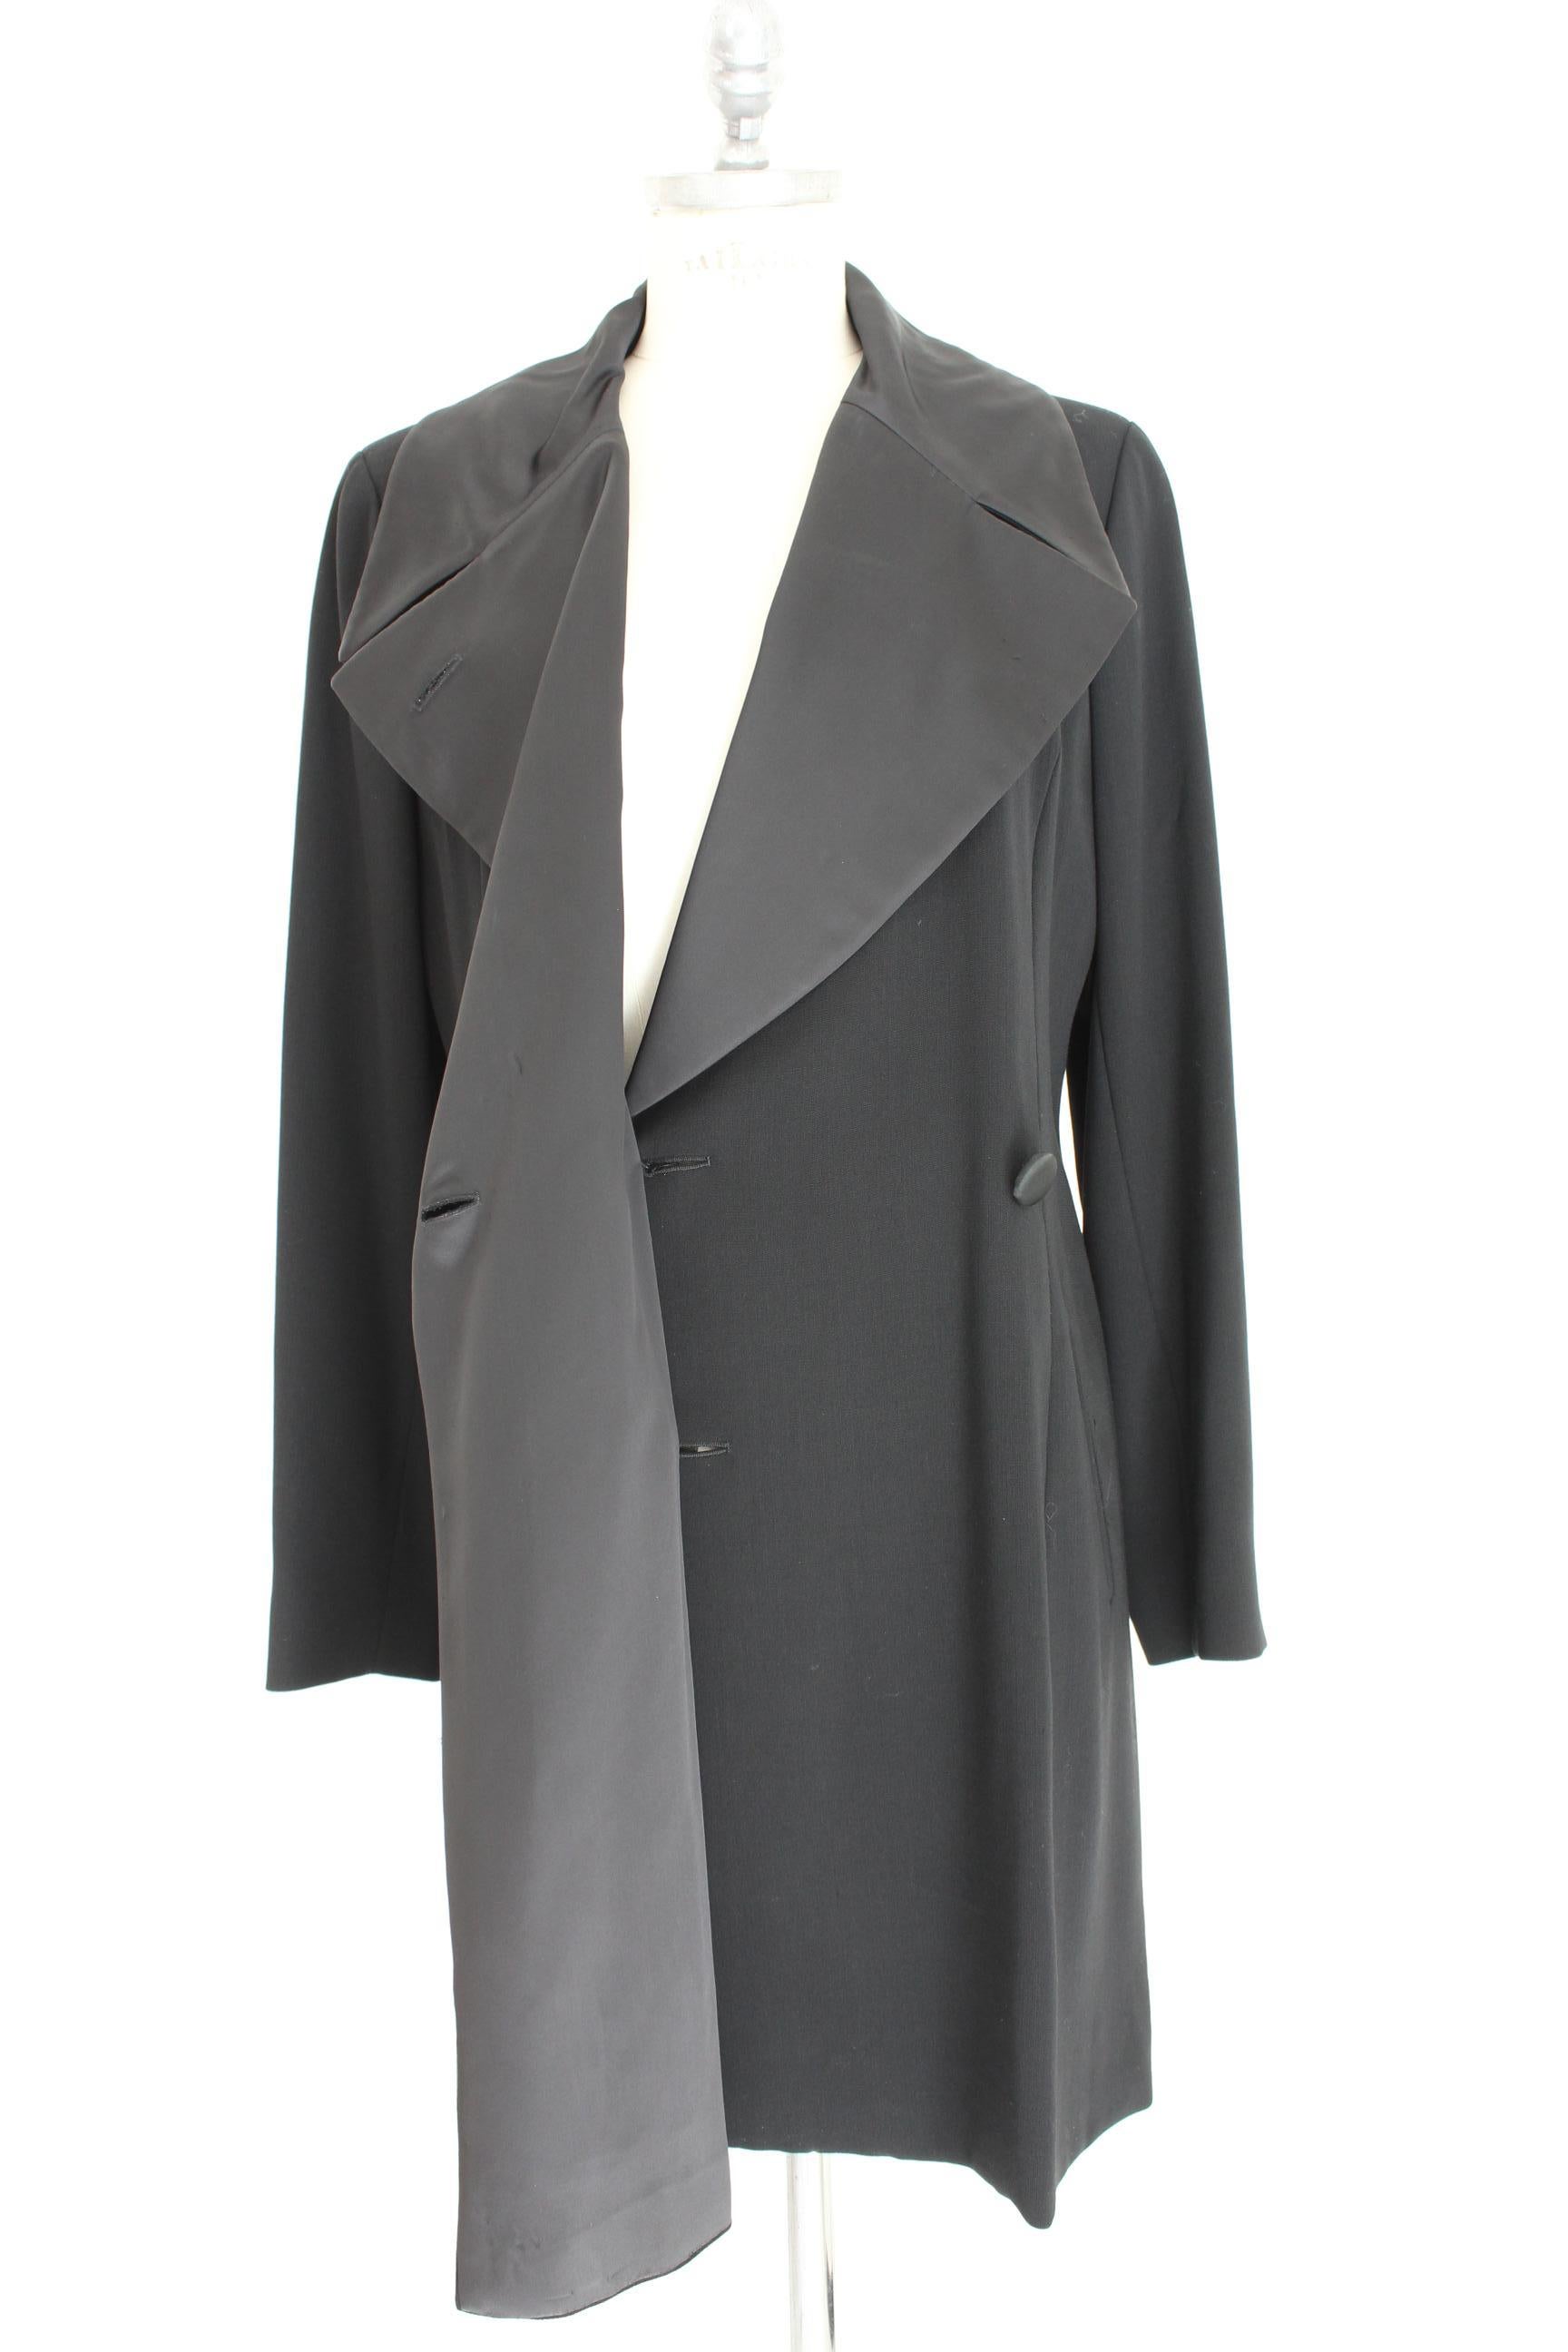 Kenzo Paris Black Wool Long Jacket Coat 1990s Shinny Lapel One Button 1